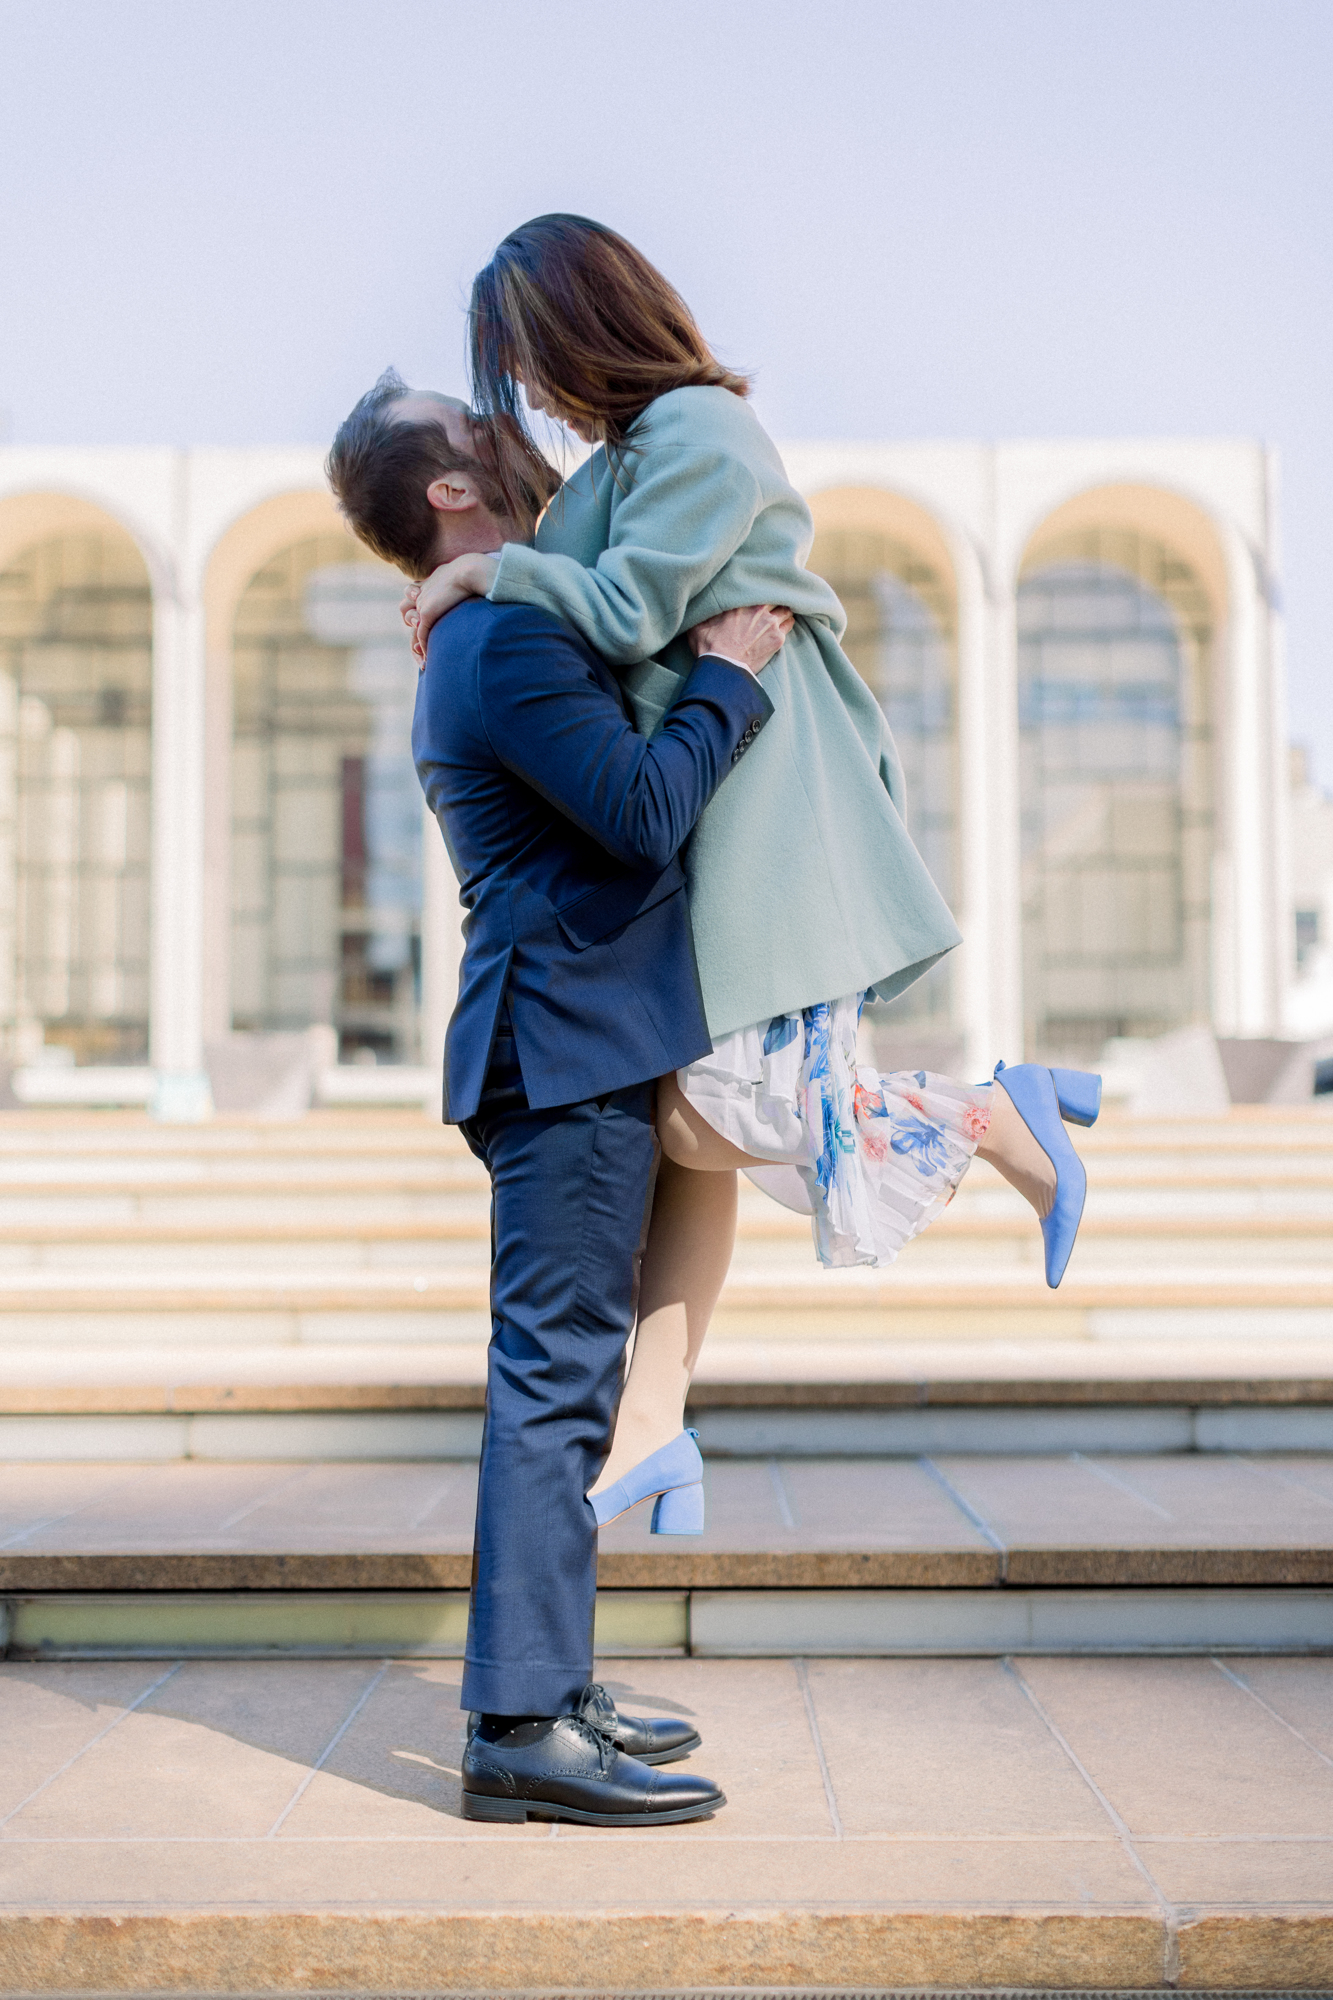 Joyful Central Park Wedding Photos in Wintery NYC